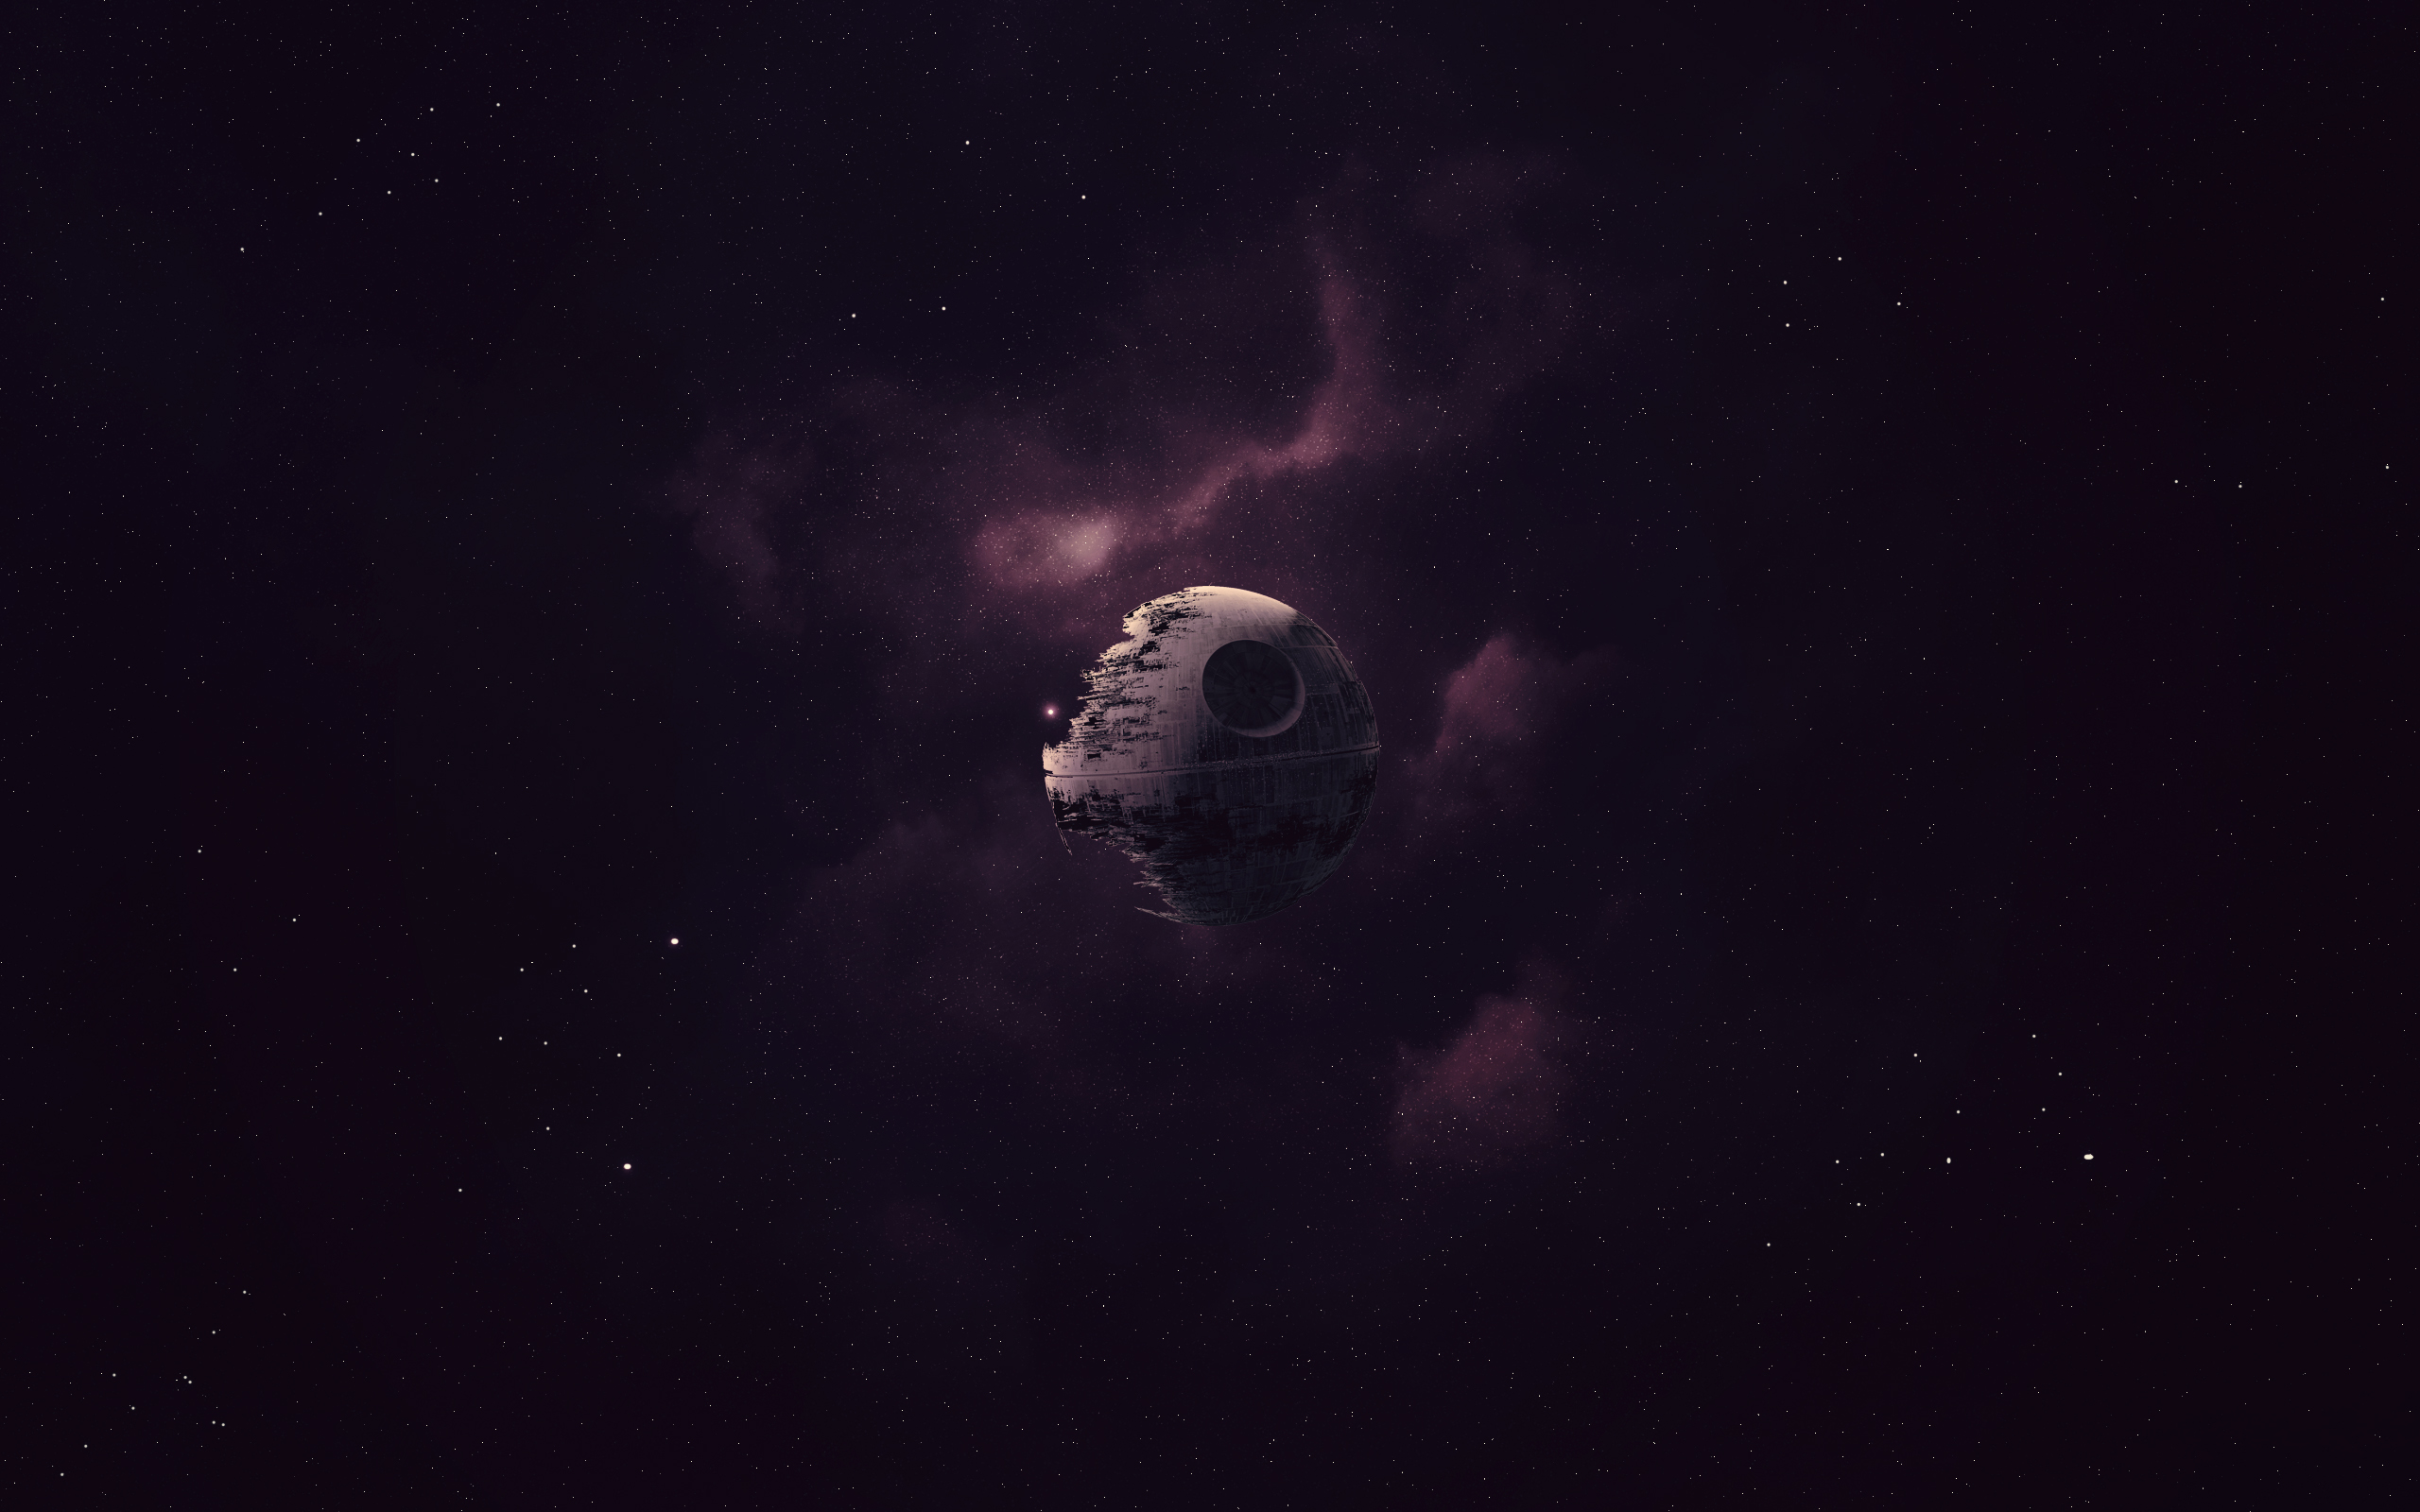 General 2560x1600 Star Wars Death Star space digital art space art science fiction